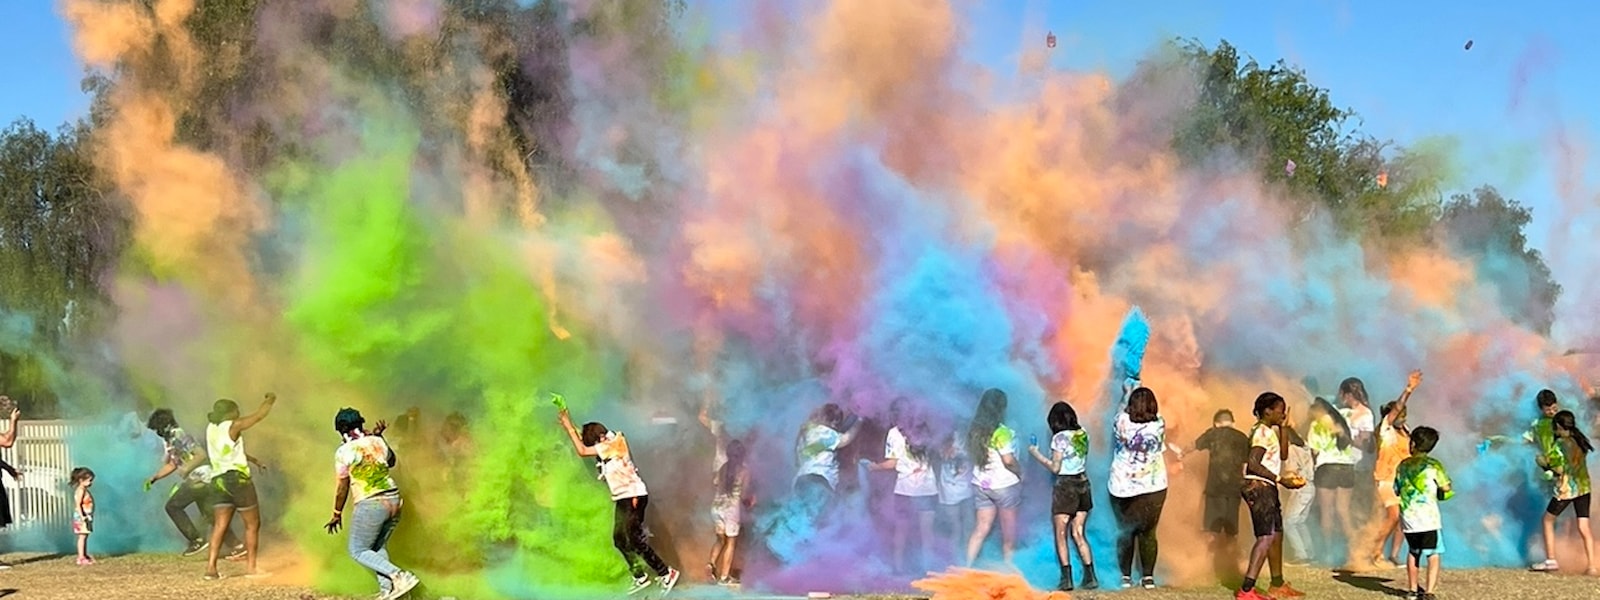 kids throwing colored chalk powder